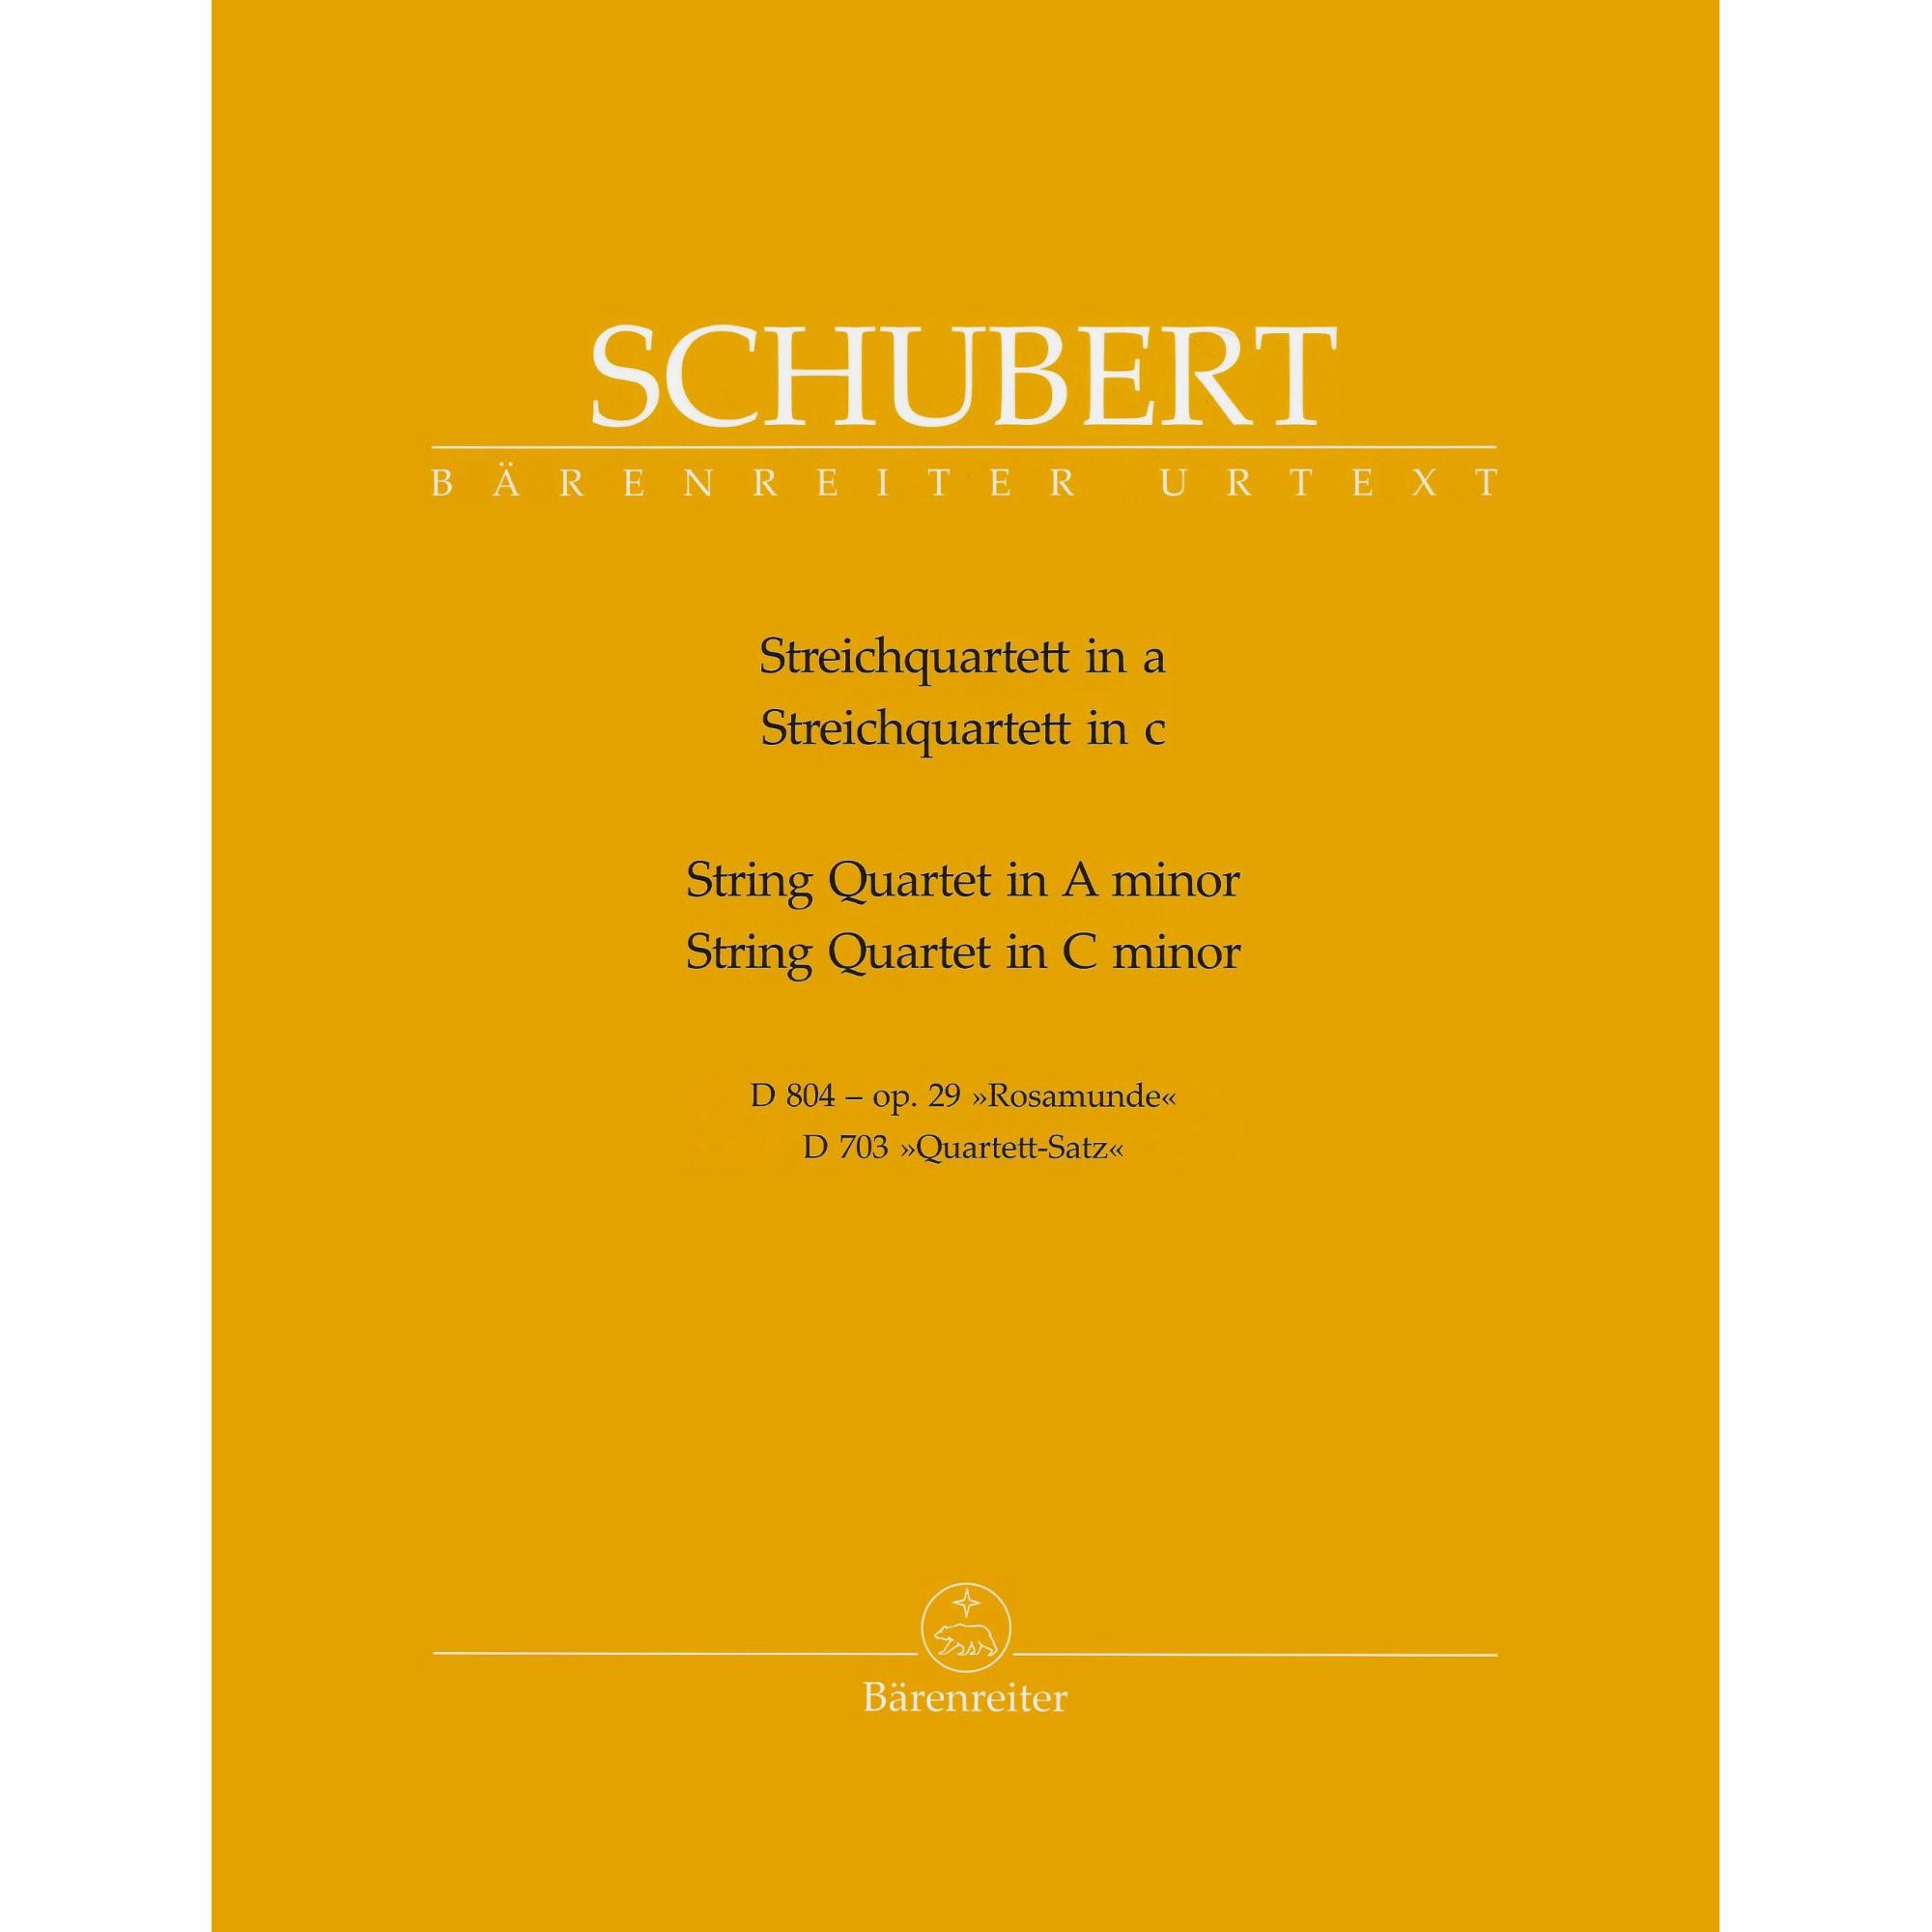 Schubert -- Rosamunde Quartet and Quartett-Satz